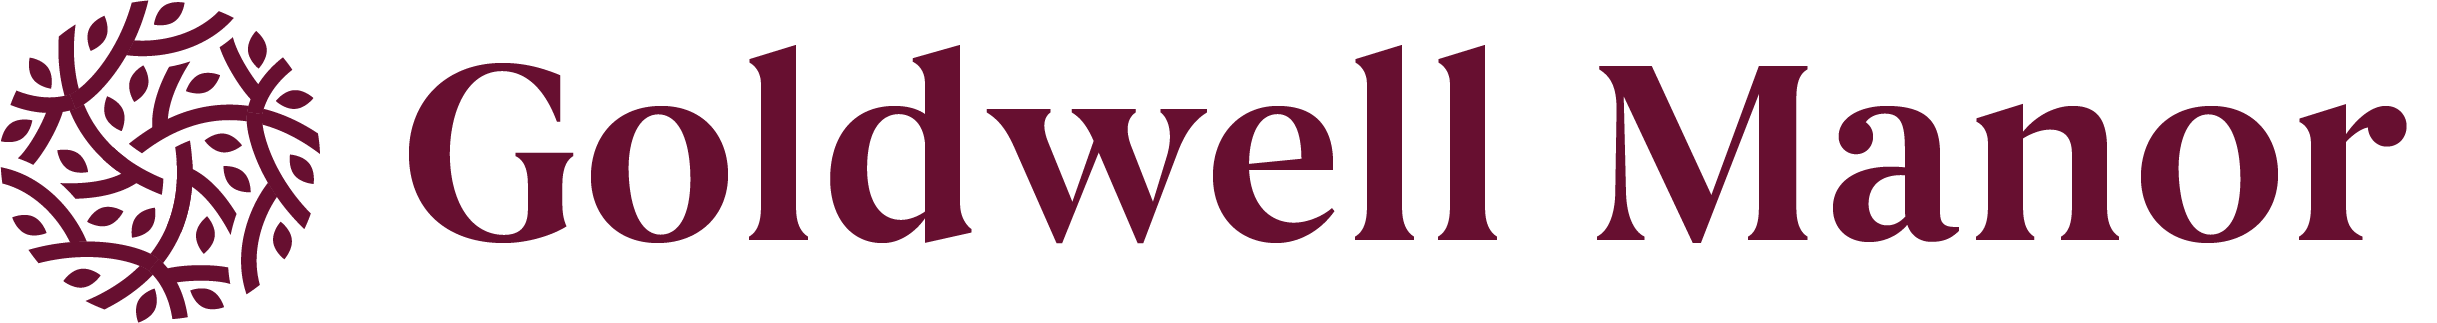 Goldwell Manor Care Home Logo